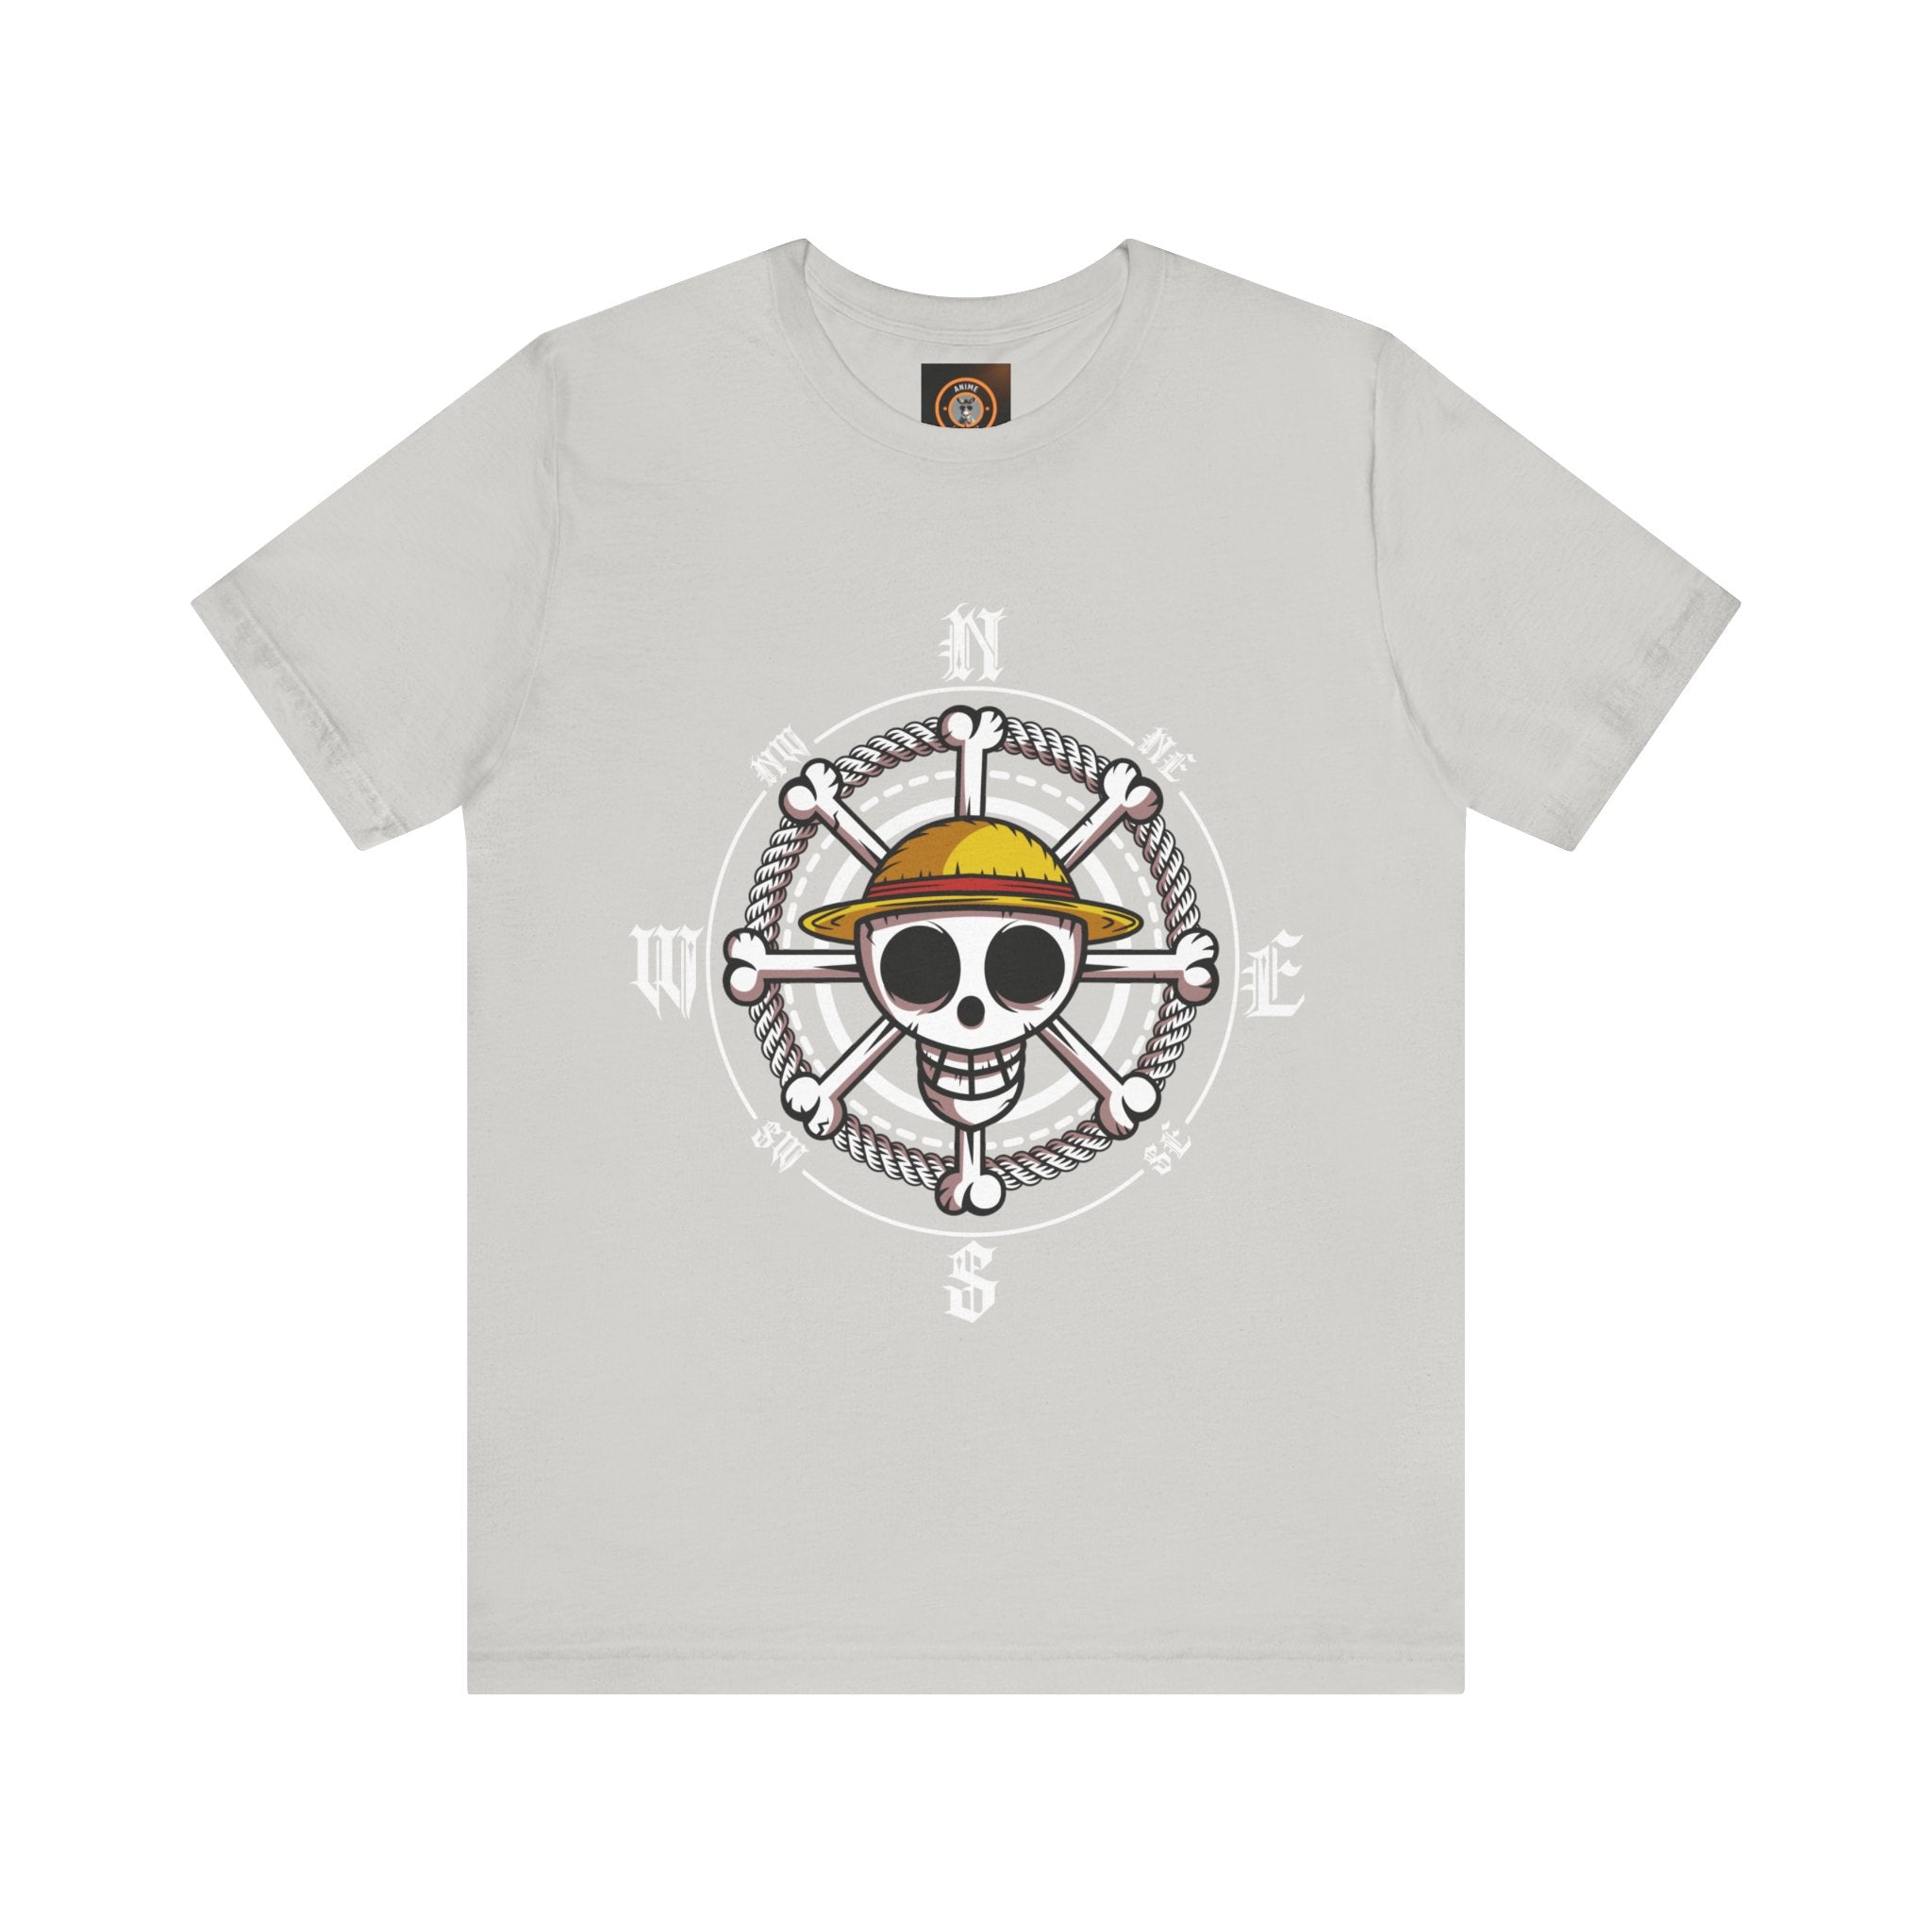 One Piece Logo T-shirt